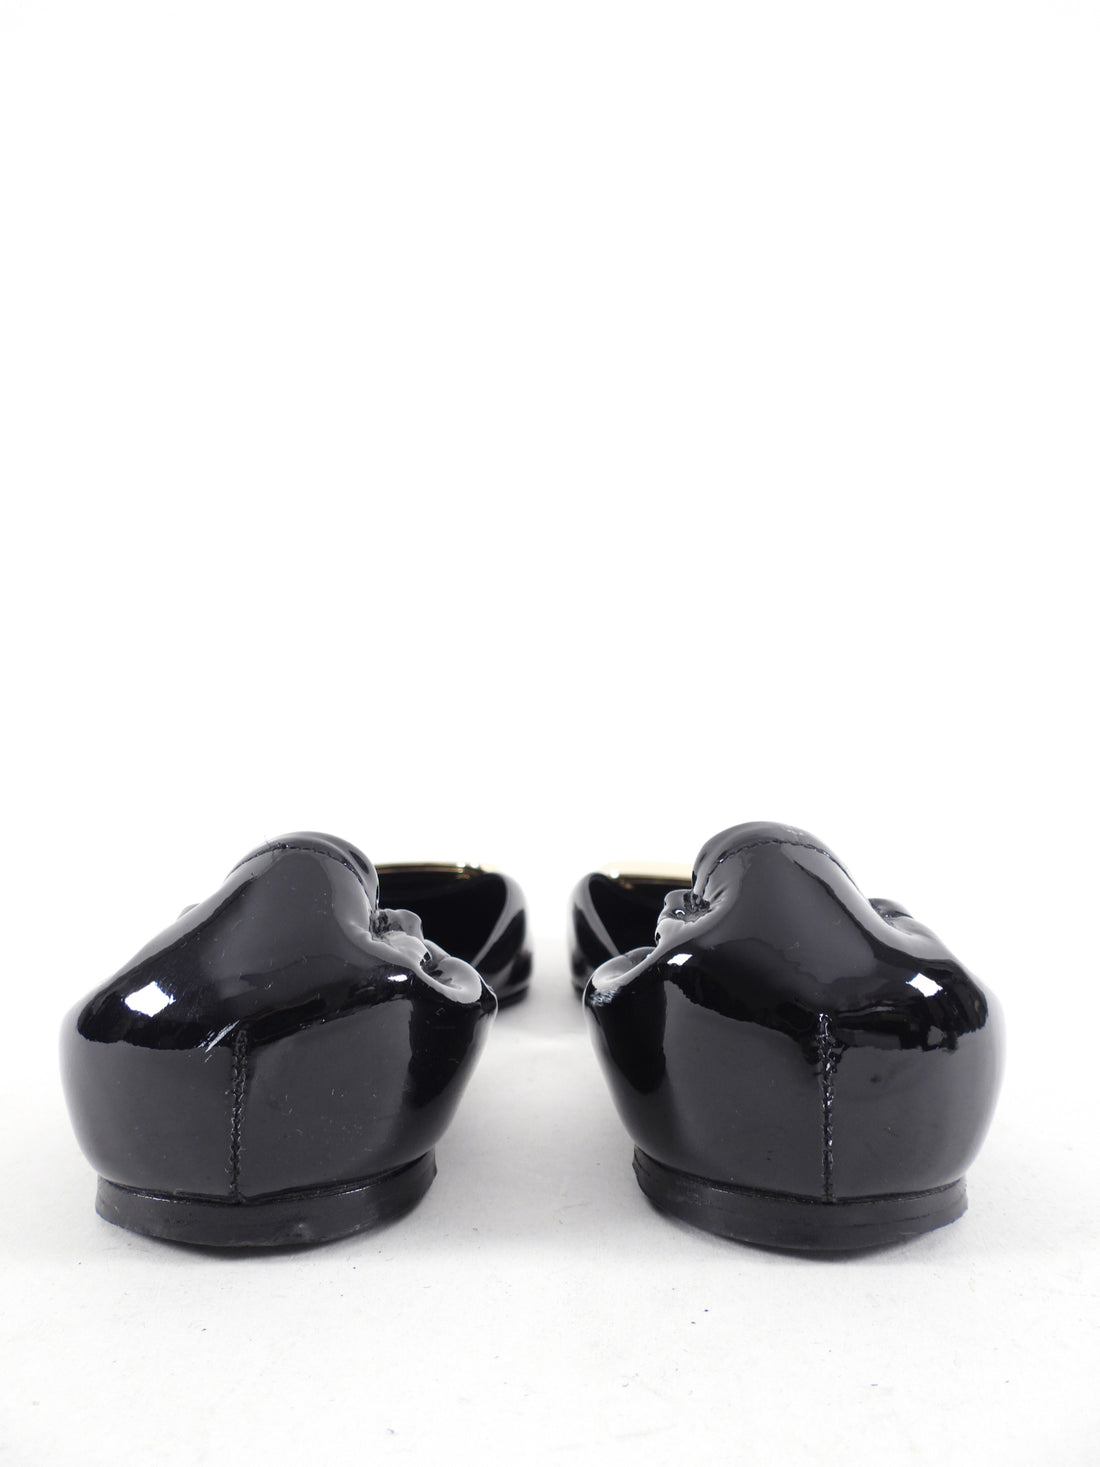 Roger Vivier Black Patent Chips Flat Shoes - USA 7.5